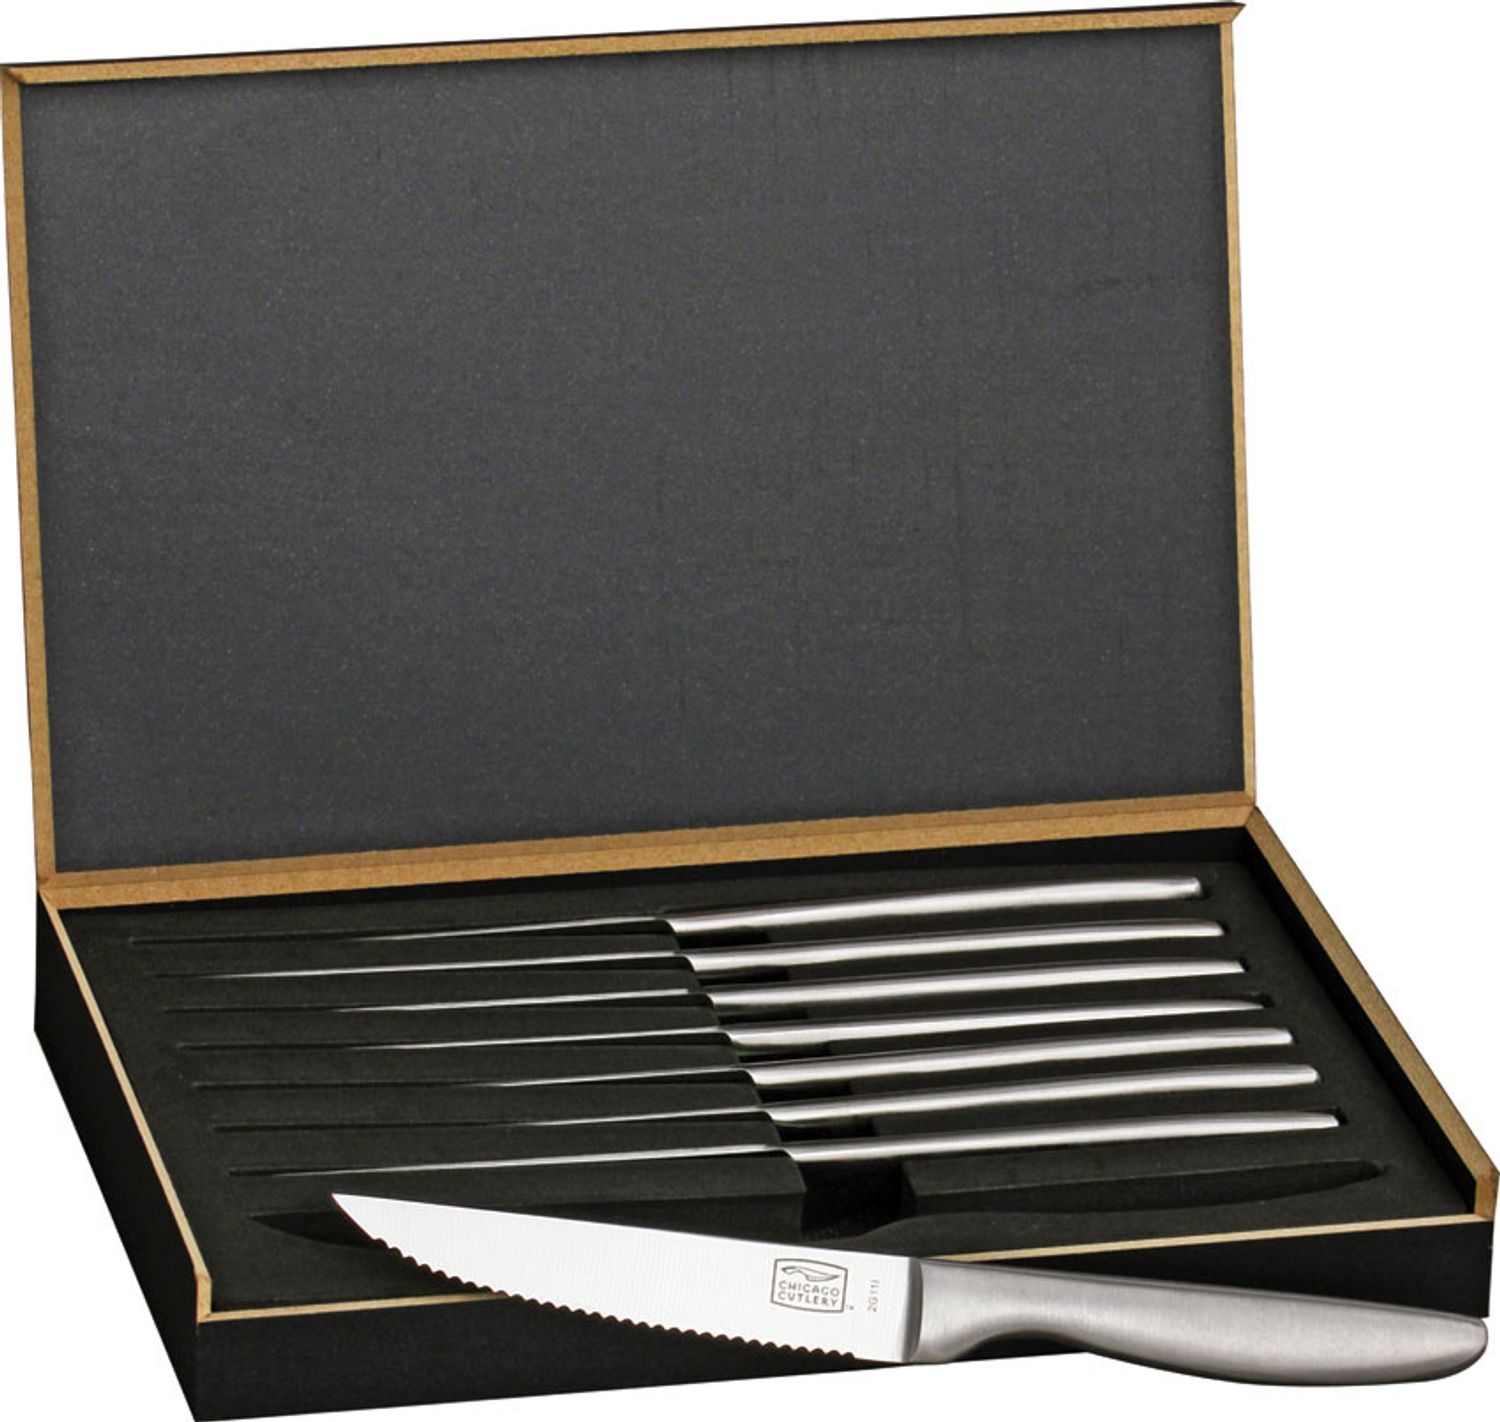 Chicago Cutlery Ellsworth 4-Pc. Steak Knife Set - Macy's